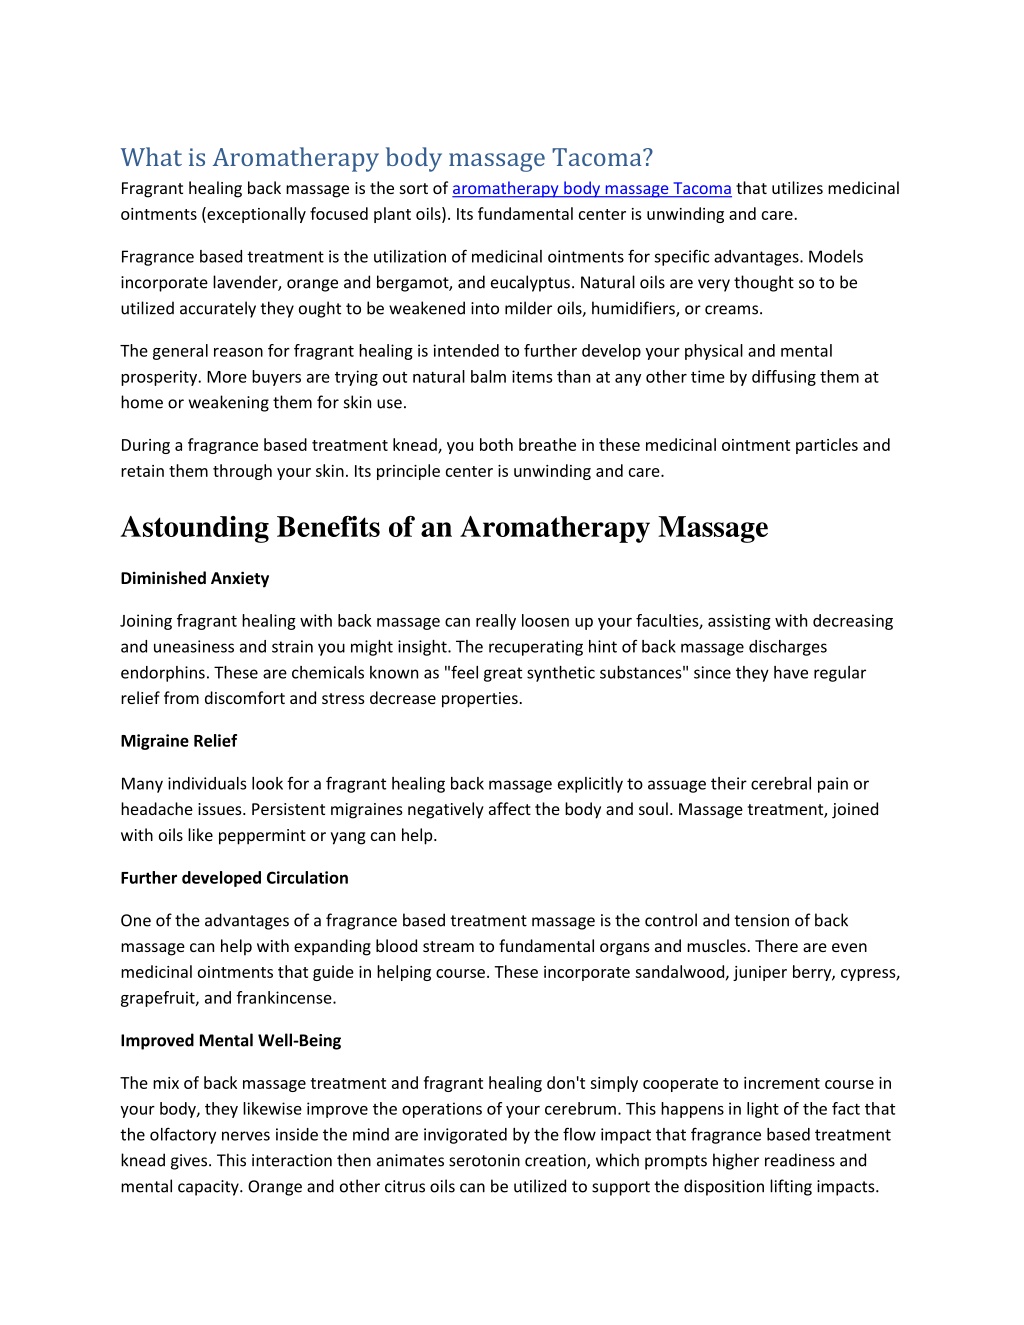 Ppt Aromatherapy Body Massage Tacoma Powerpoint Presentation Free Download Id11220831